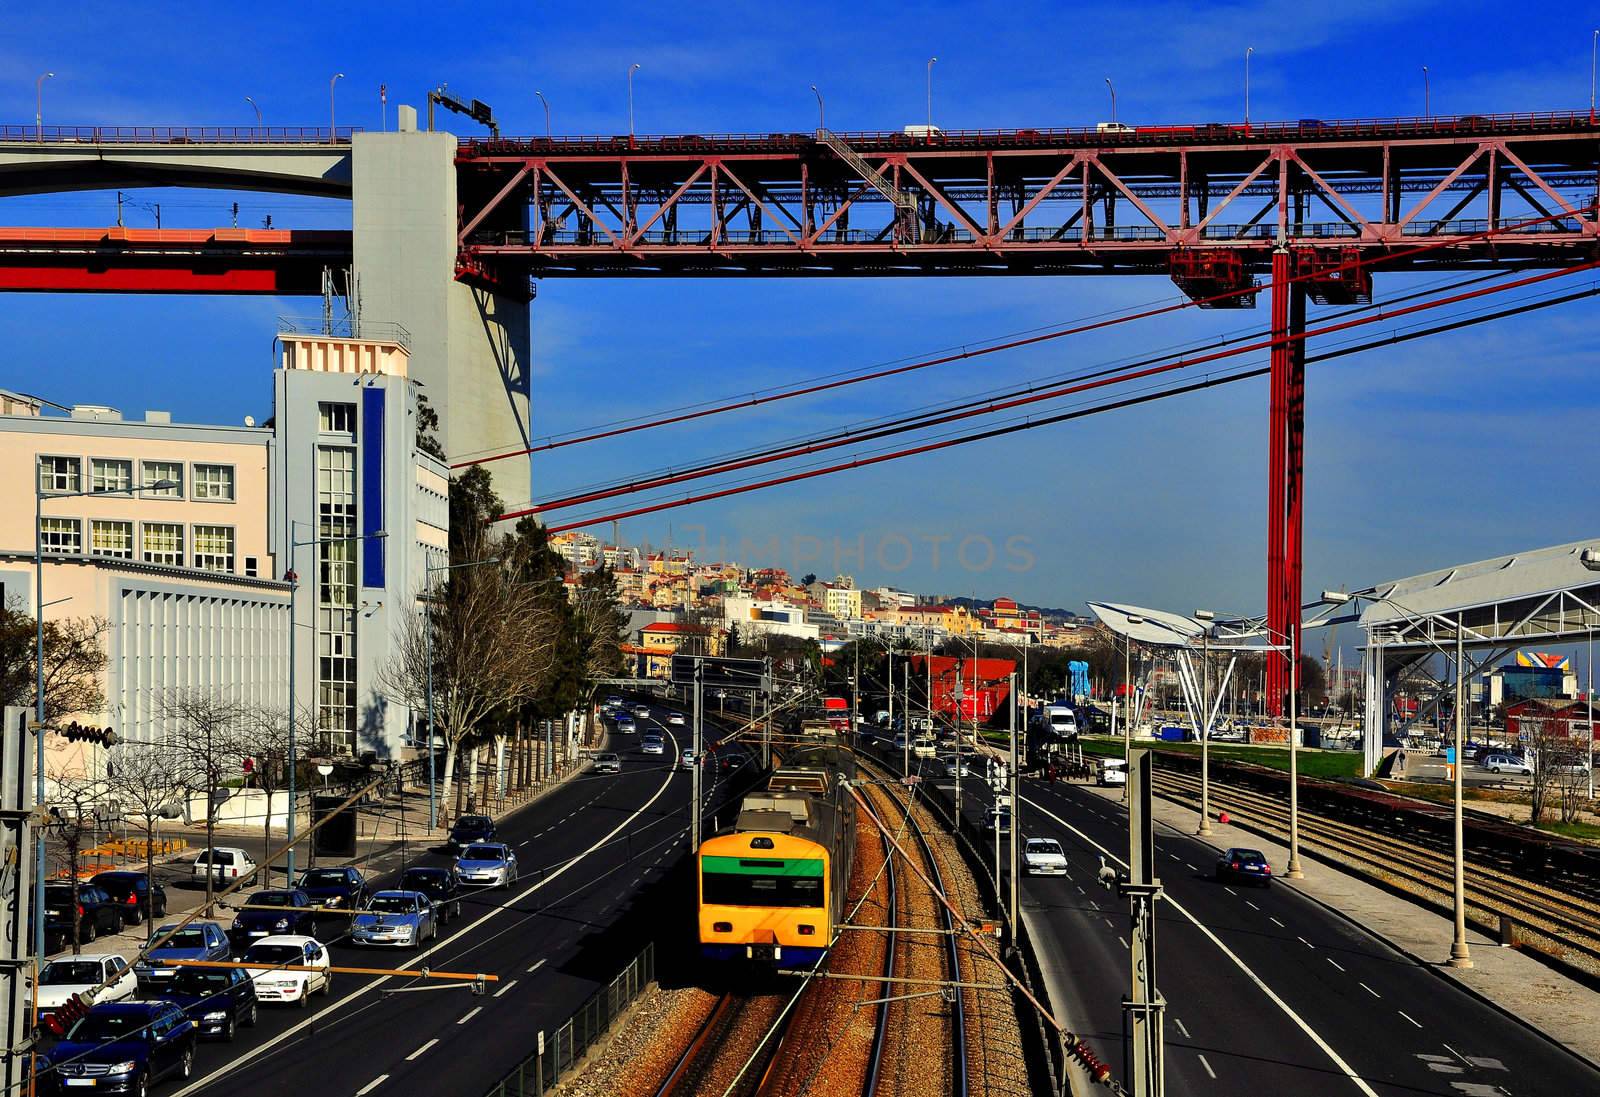 Transportation train cars in the city of Lisbon - Rail-road 2 storey bridge over the River Tejo